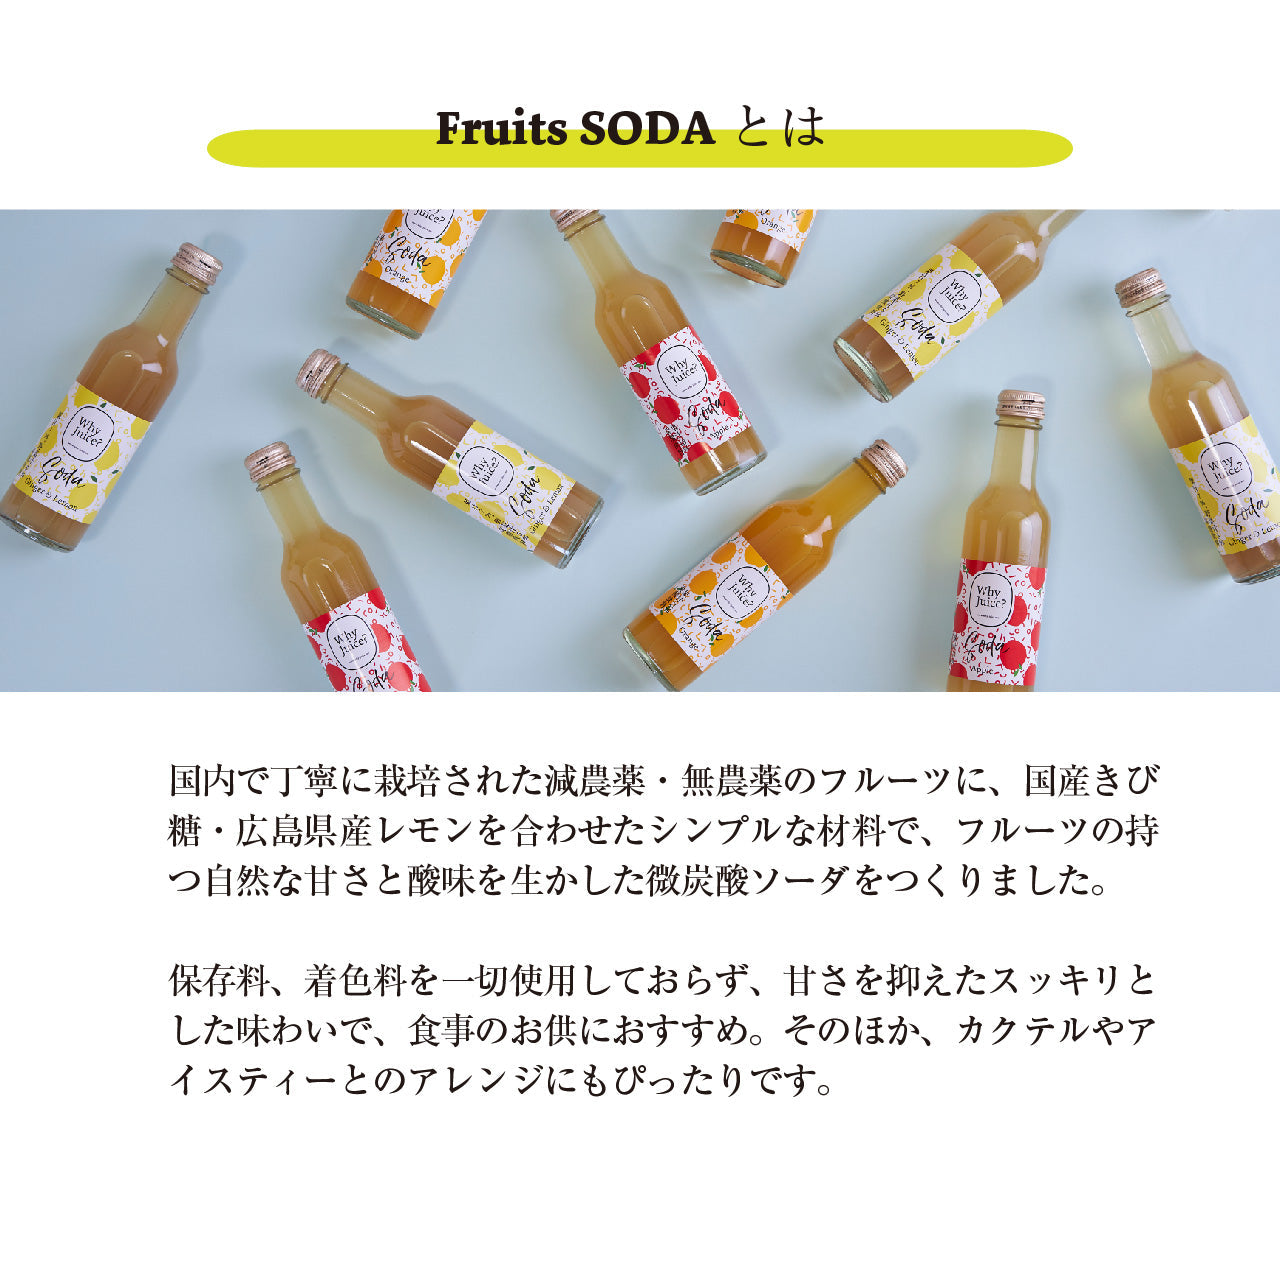 Fruits SODA 清見オレンジ (30本入)【減農薬・無農薬の果物と野菜】